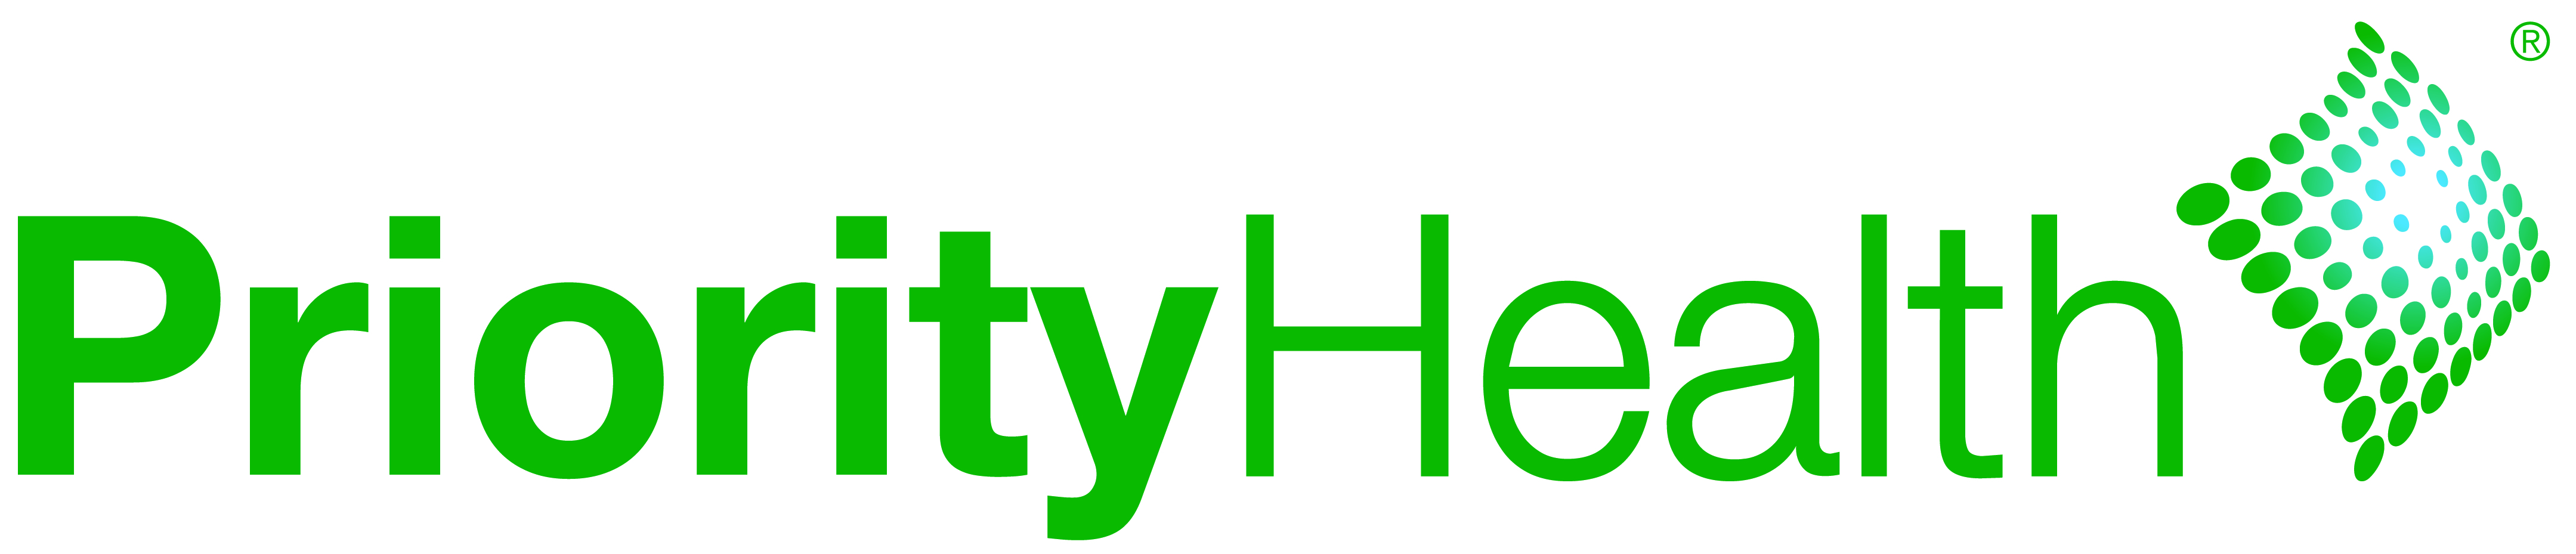 PriorityHealth logo_horizontal_CMYK - MARSP